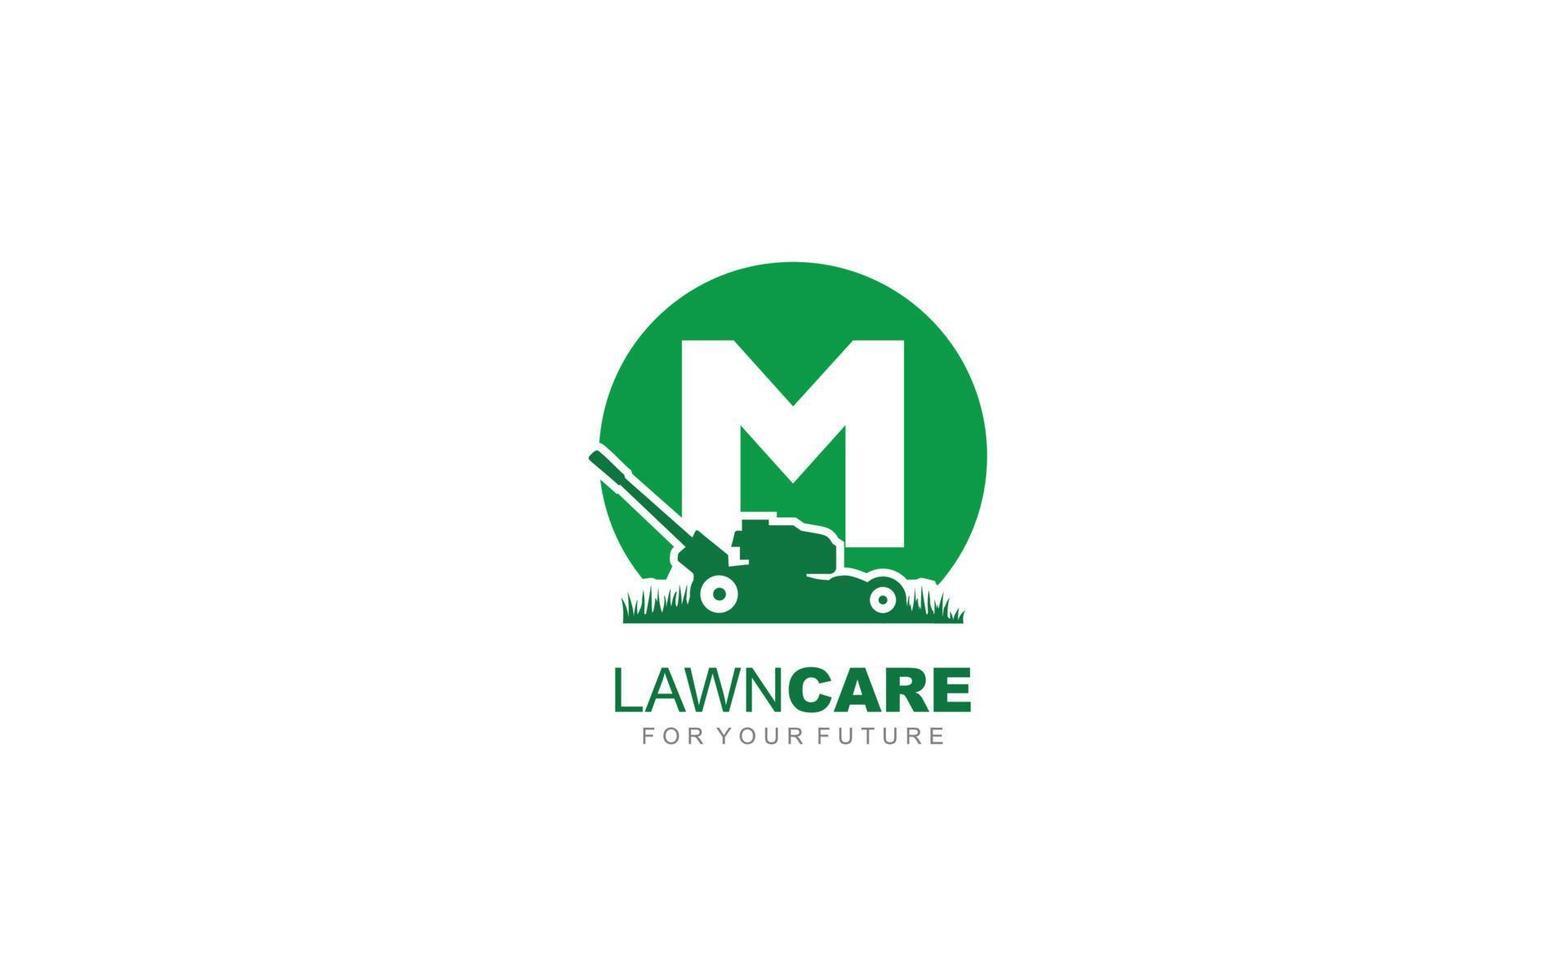 M logo lawncare for branding company. mower template vector illustration for your brand.